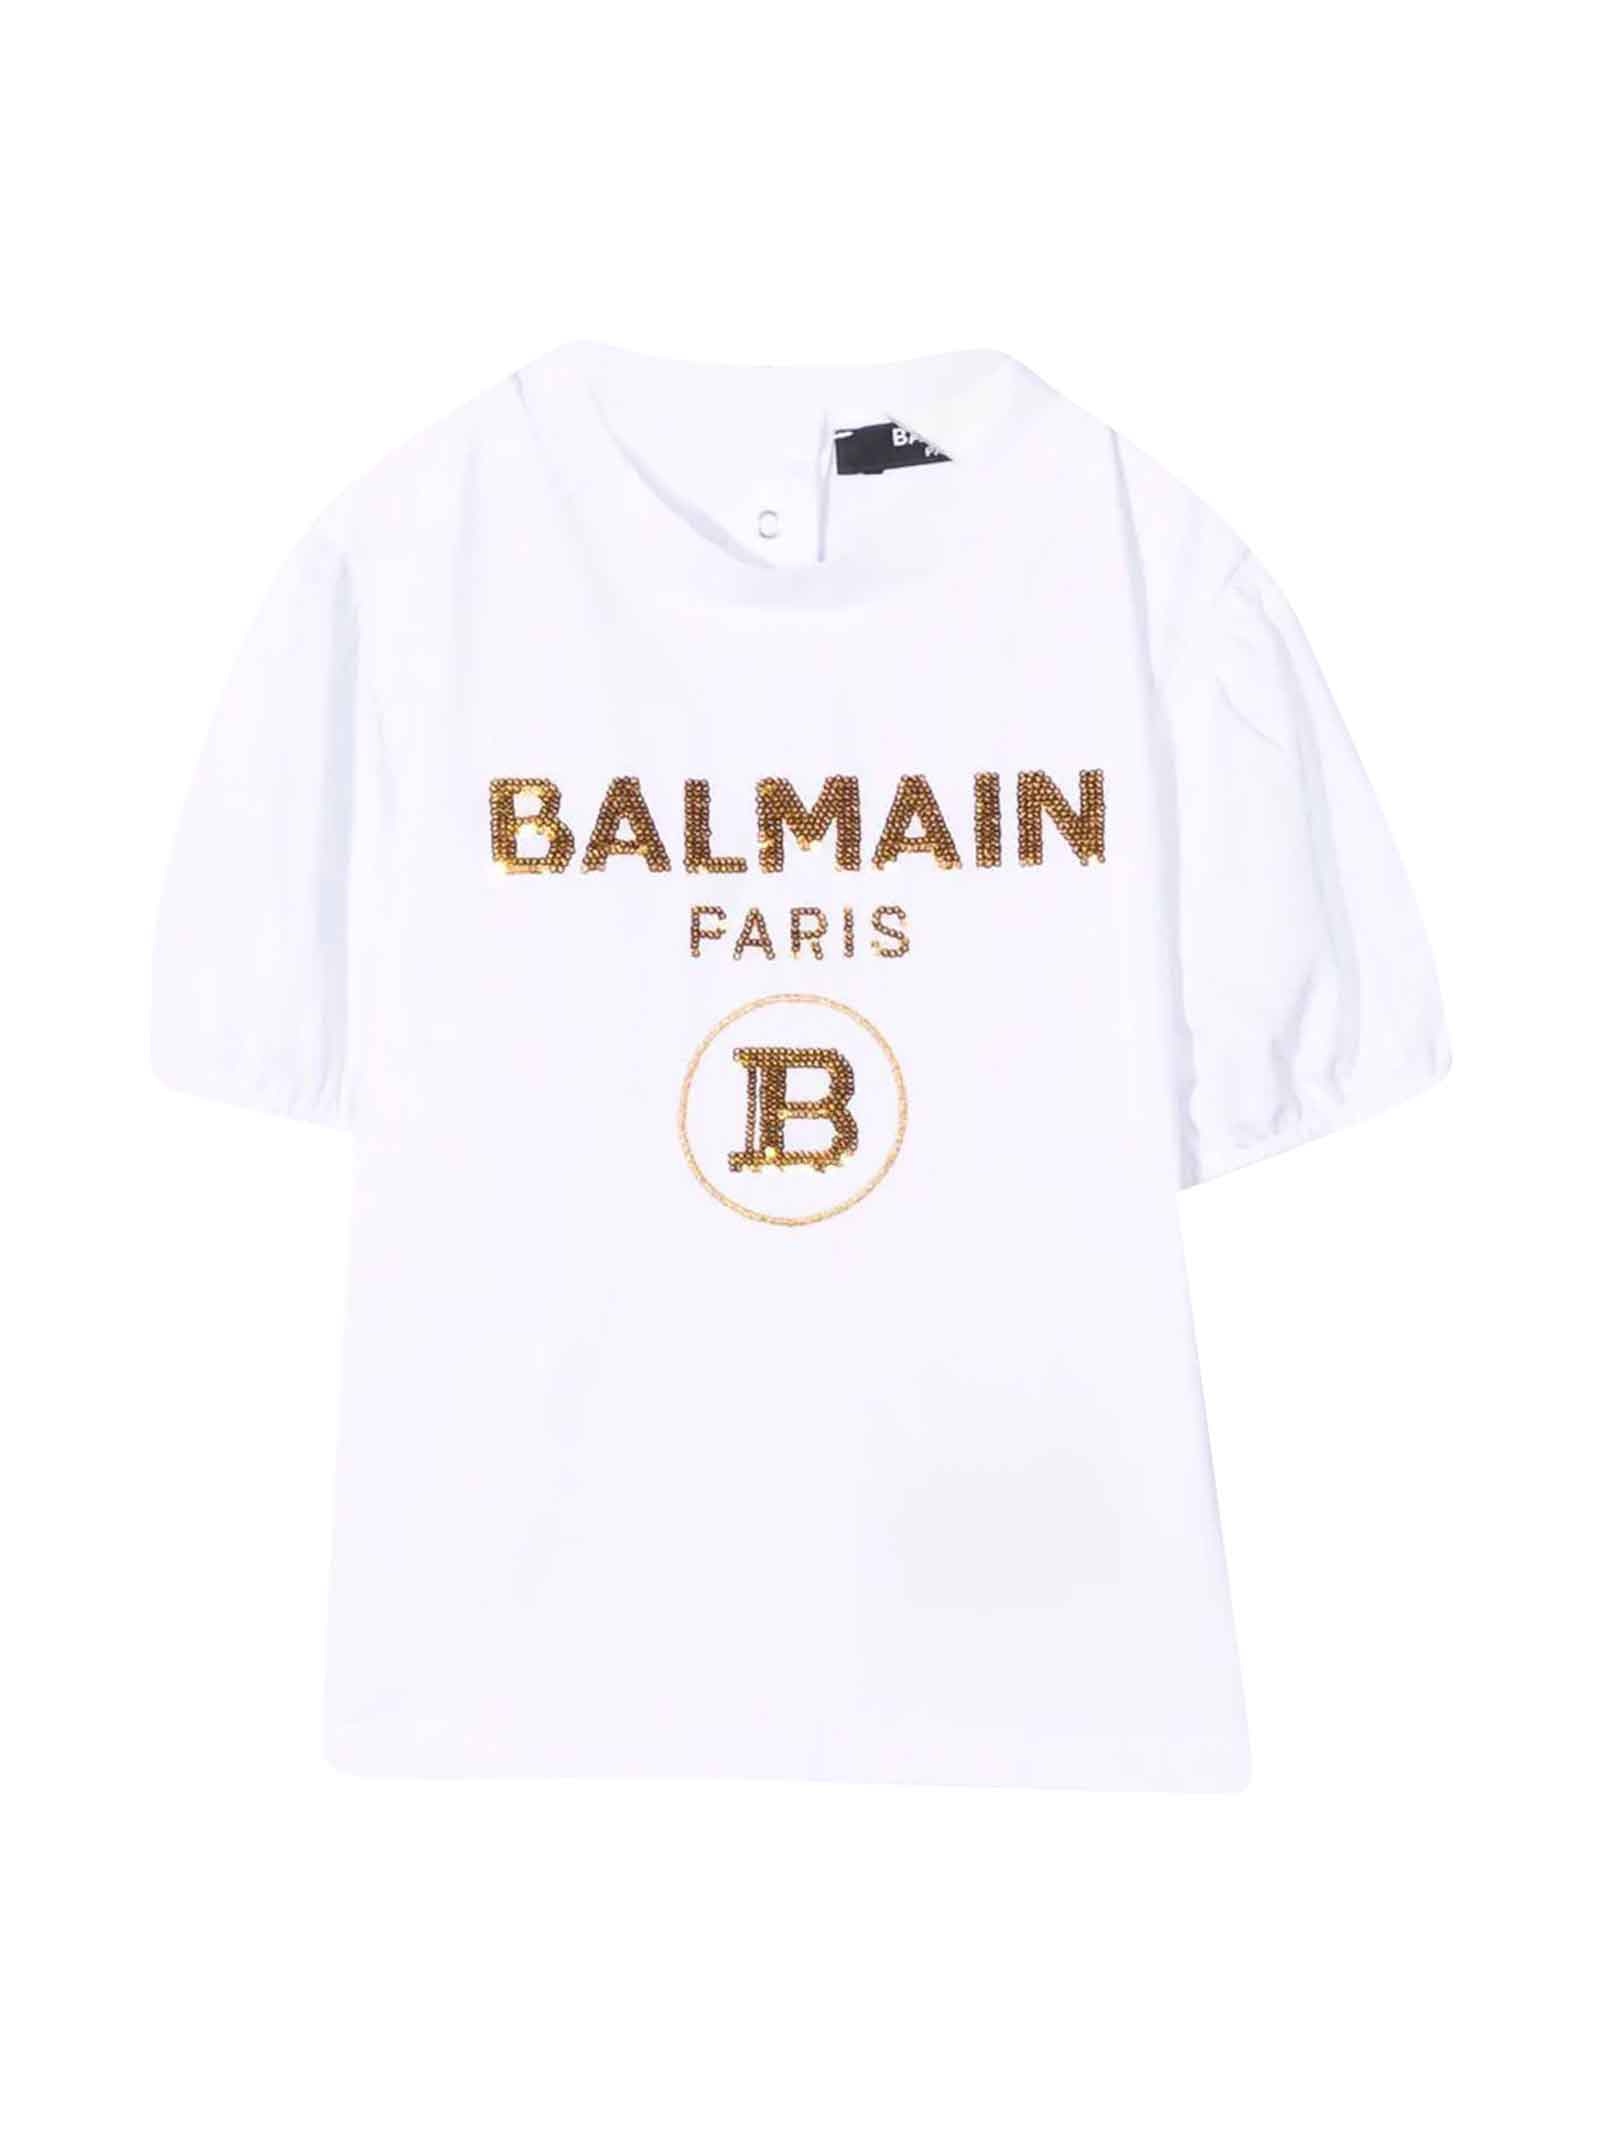 Balmain White T-shirt With Gold Print